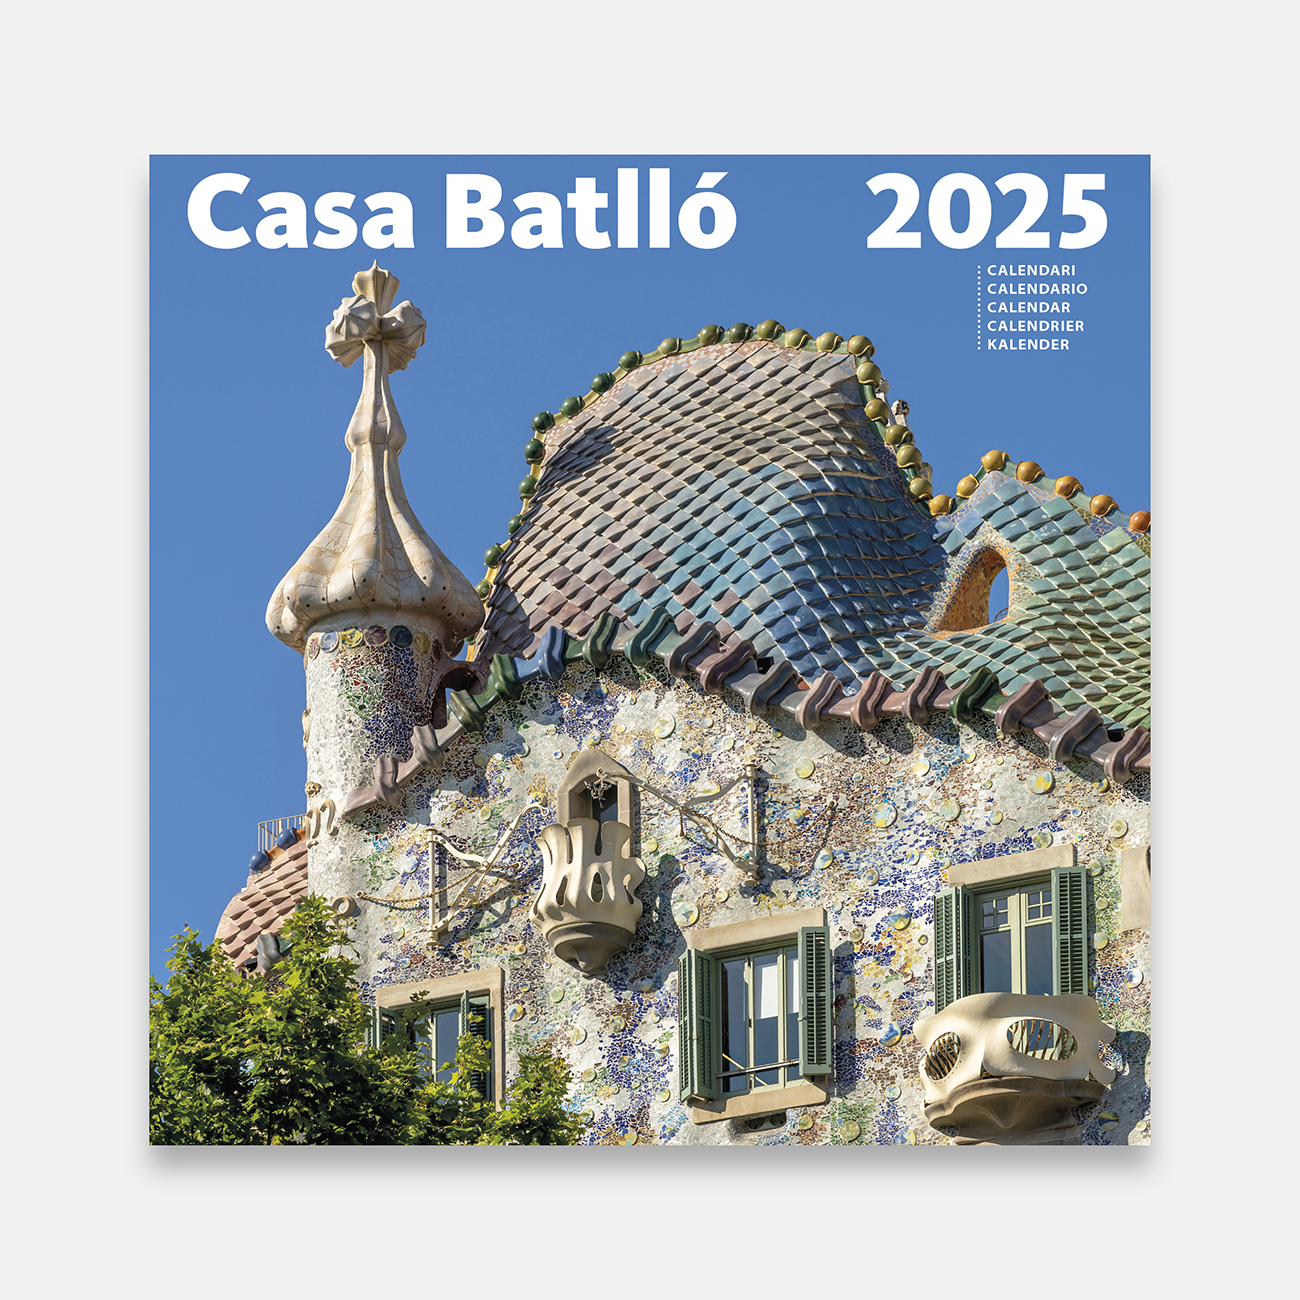 Calendar 2025 Casa Batlló 25cb calendario pared 2025 gaudi casa batllo